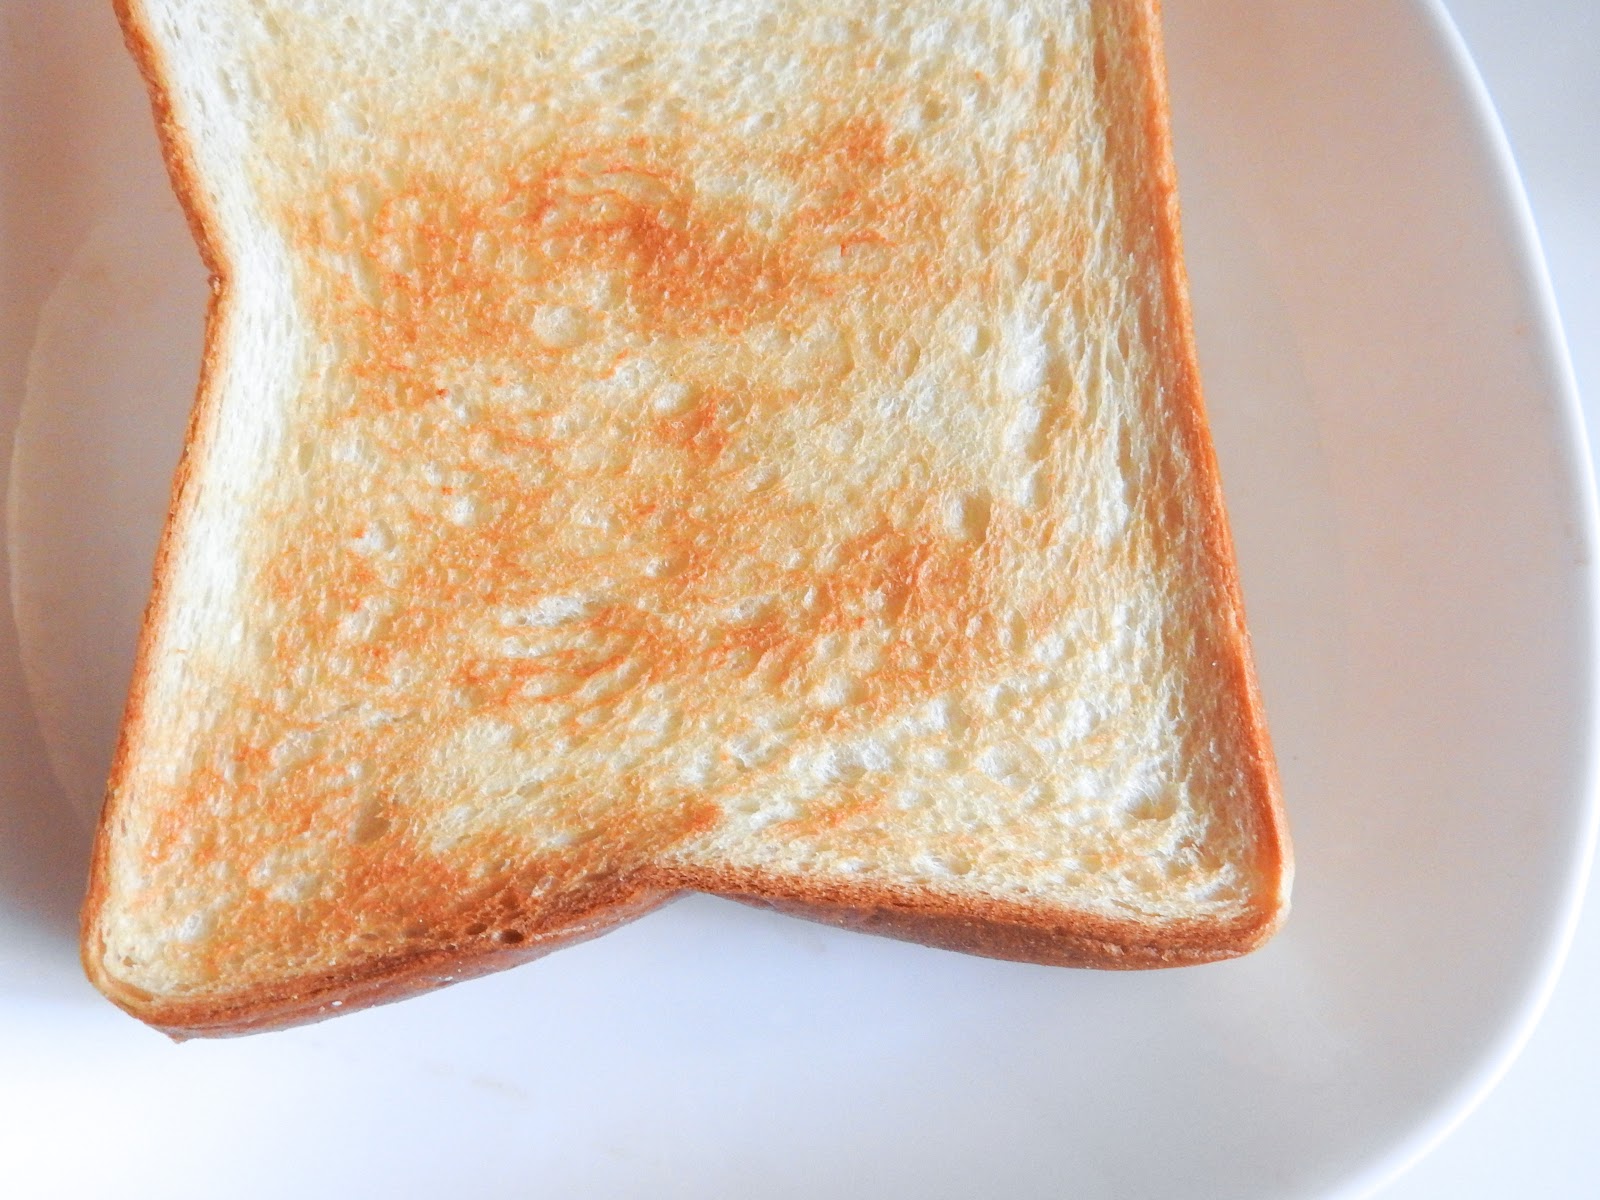 https://get.pxhere.com/photo/food-sliced-bread-toast-dish-white-bread-cuisine-ingredient-breakfast-bread-baked-goods-Milk-toast-Melba-toast-finger-food-dessert-produce-loaf-1605646.jpg